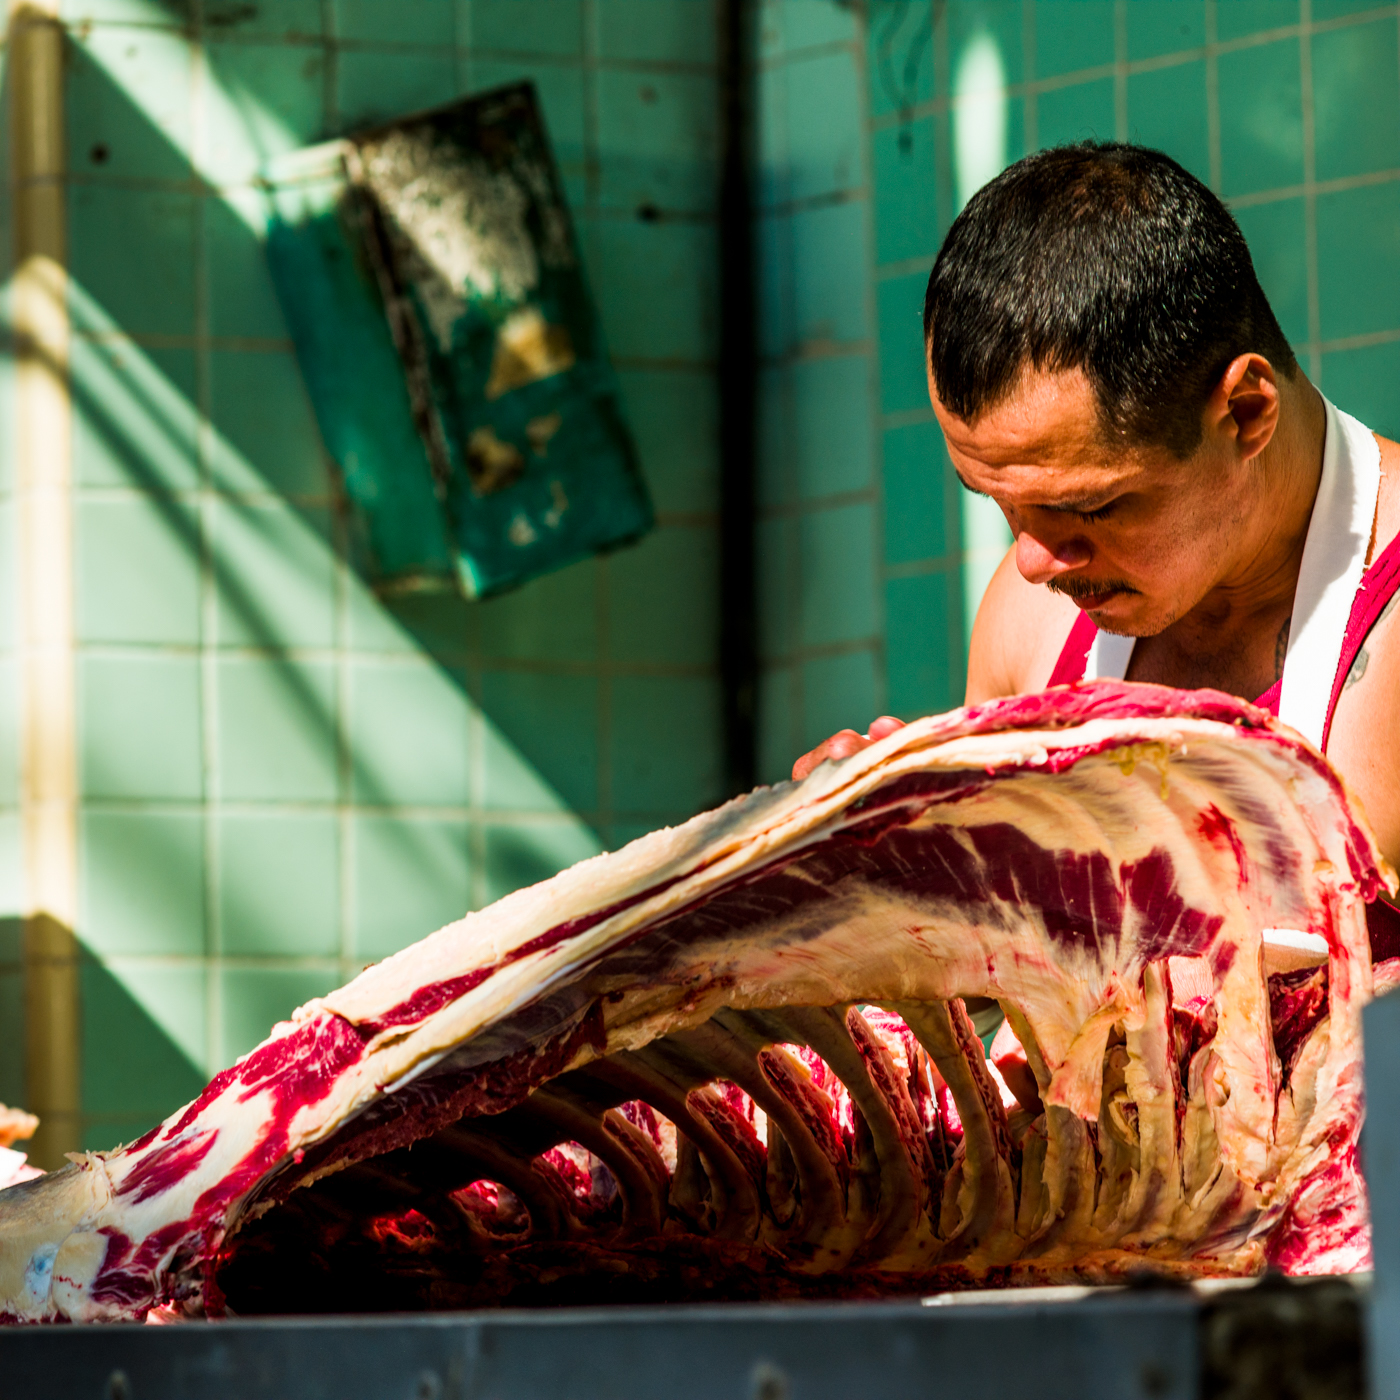 mexico market Mercado mazatlan sinaloa Mexican matt mawson documentray photography photojournalism  reportage